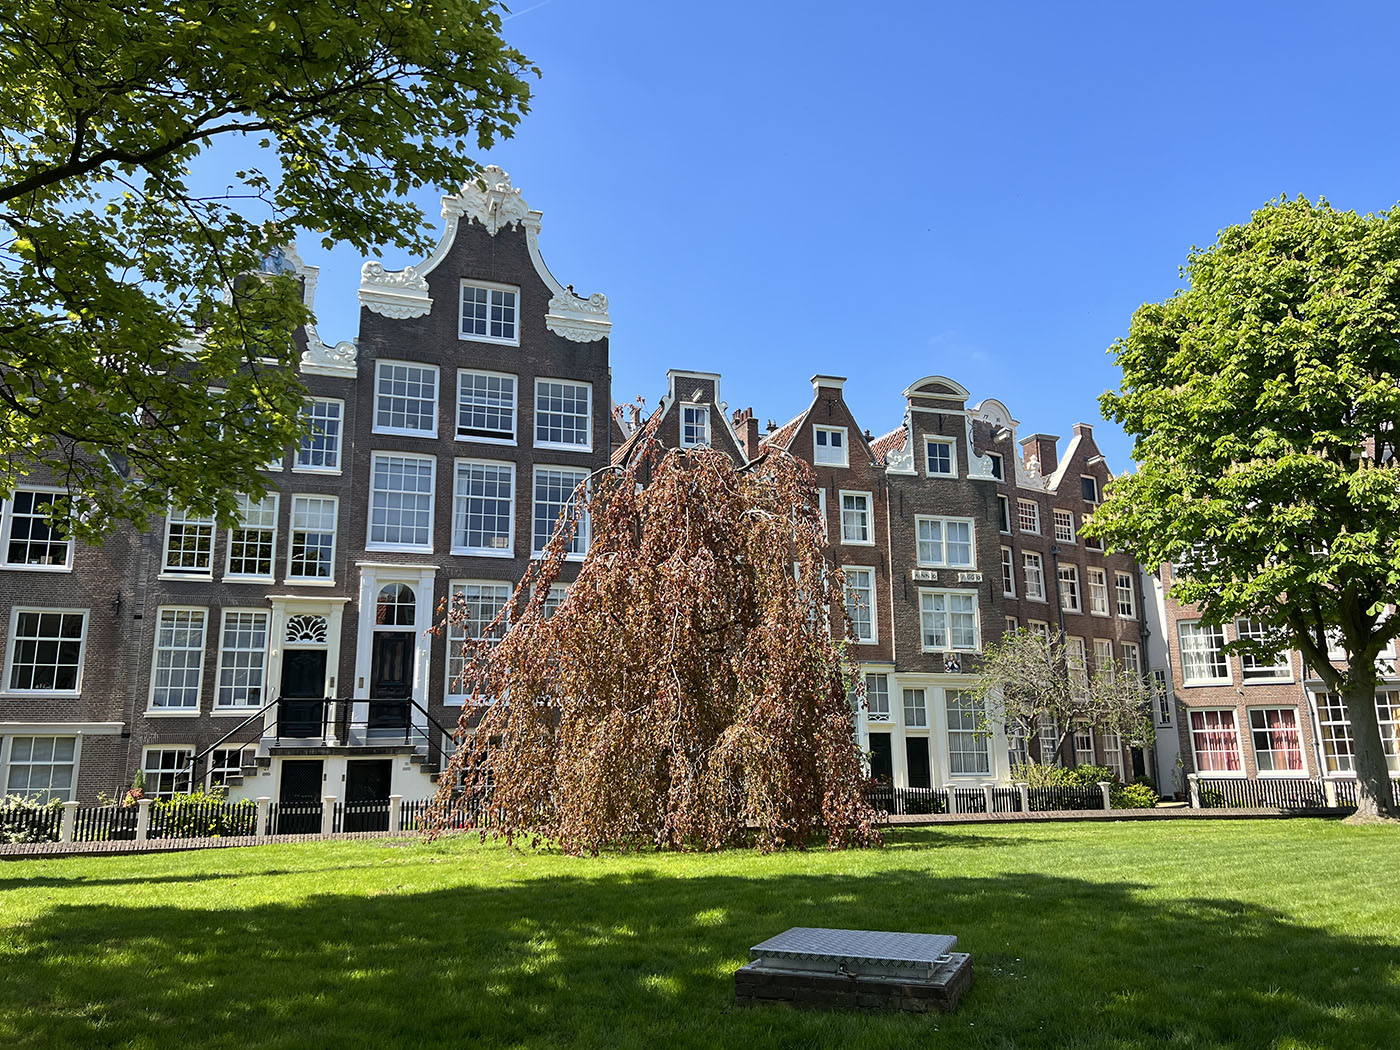 The Begijnhof. Amsterdam, Netherlands. Credit: Carolina Valenzuela